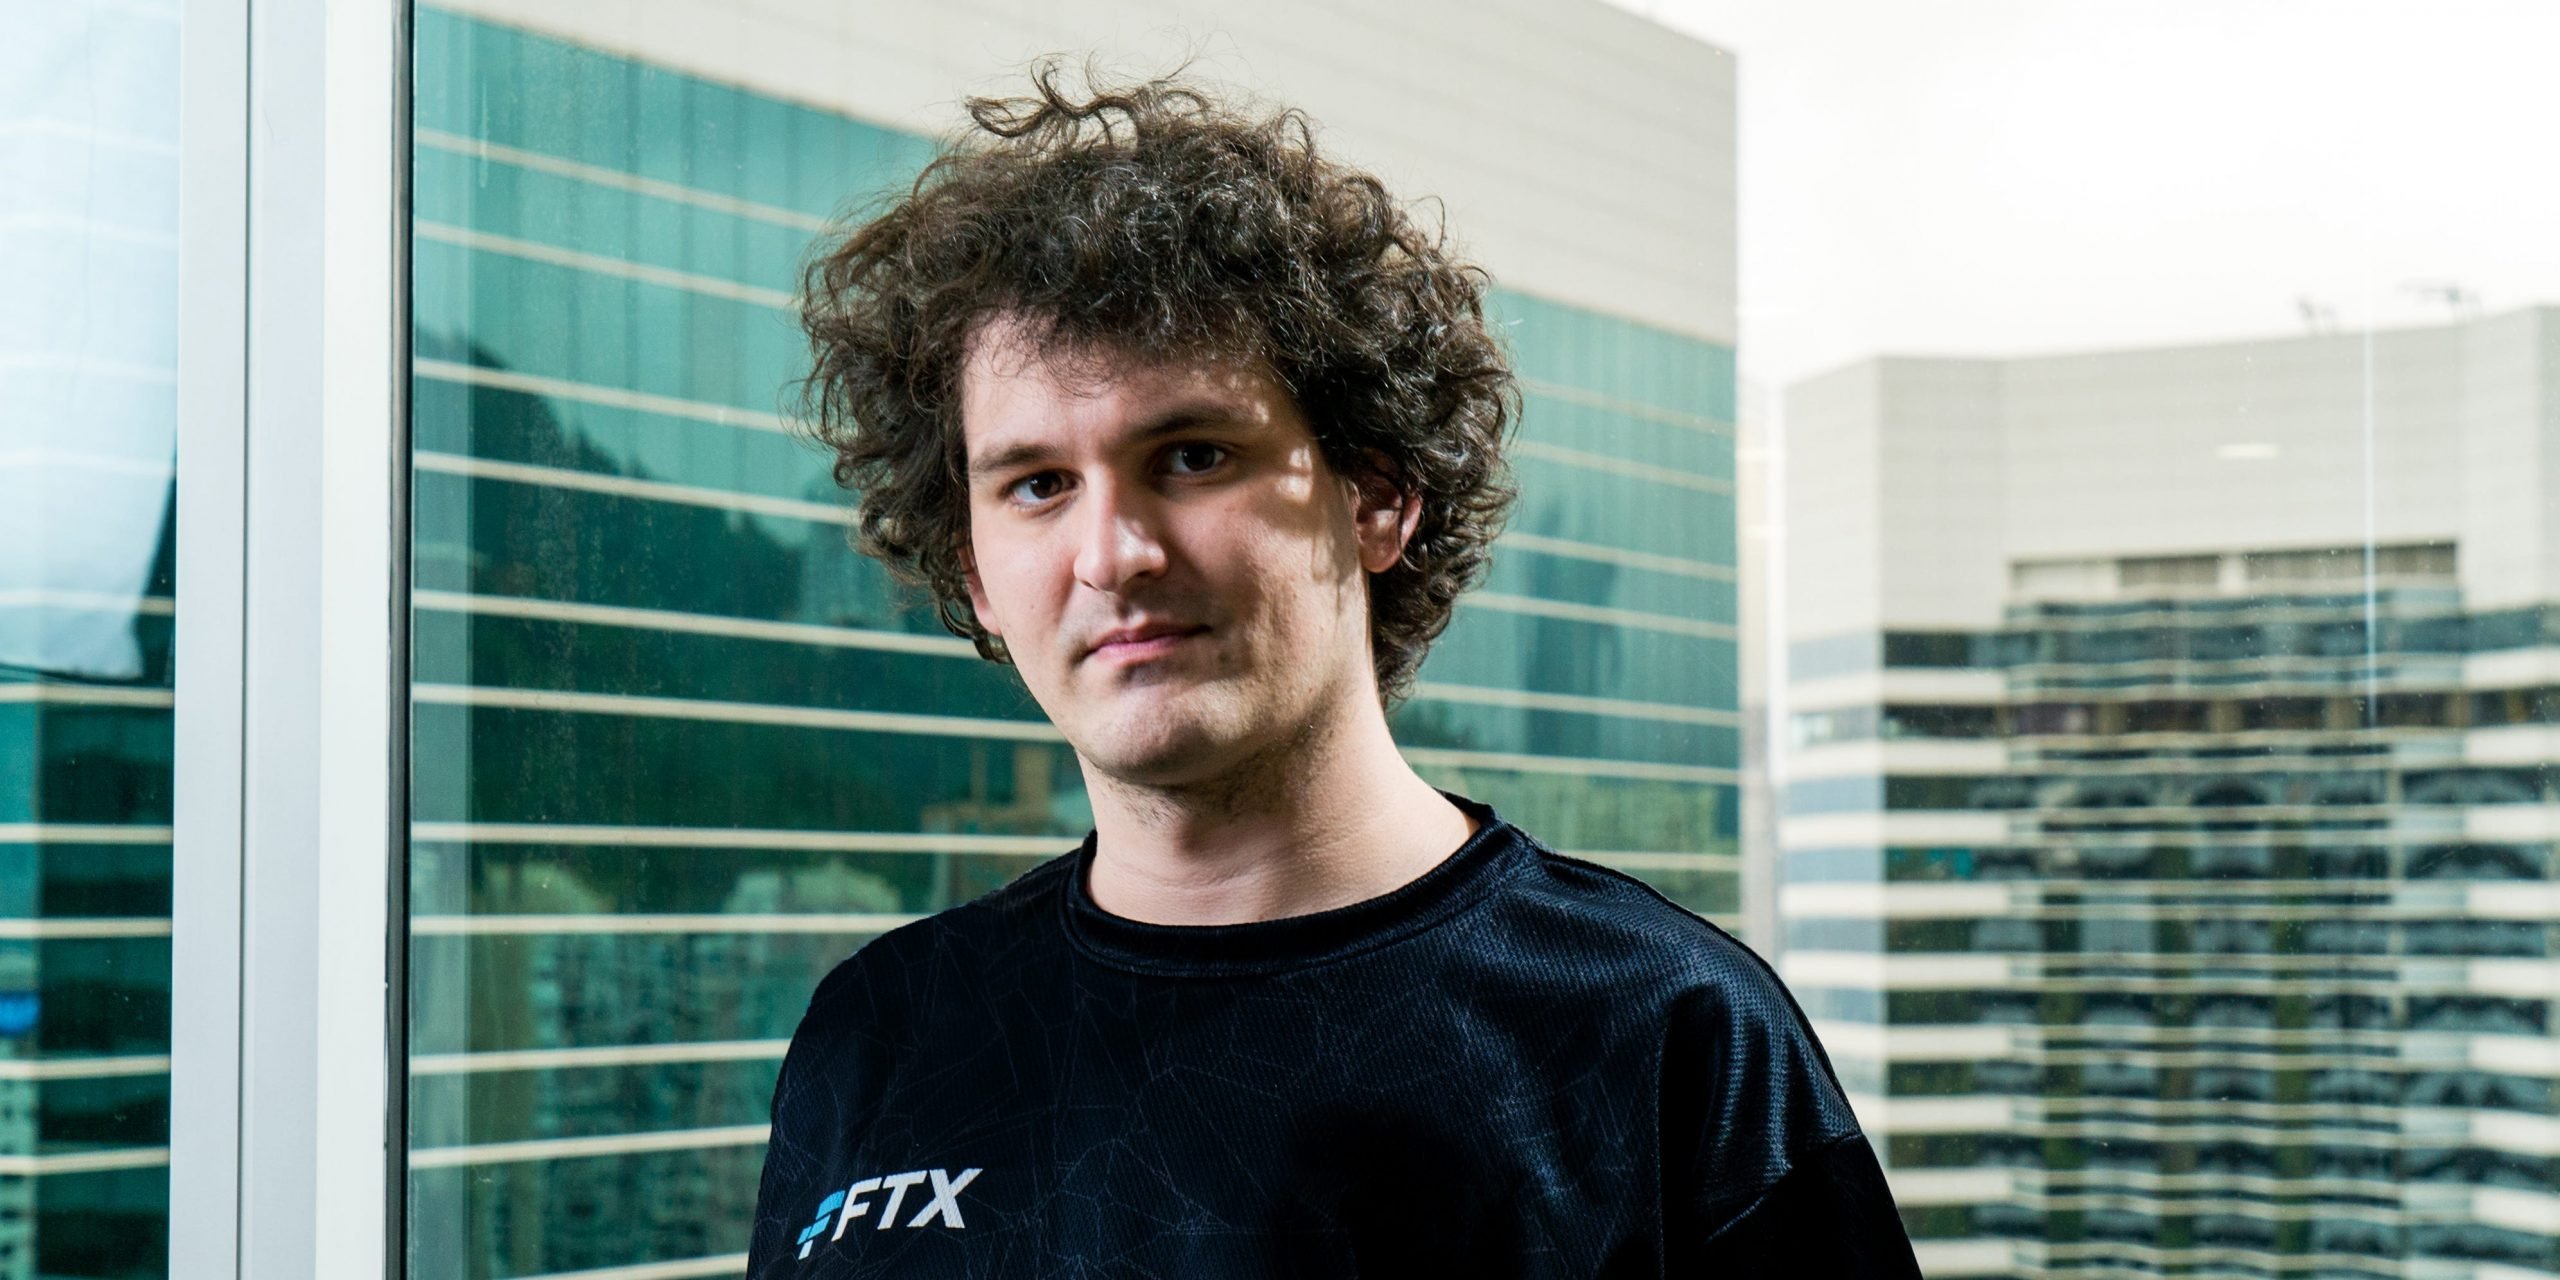 Sam Bankman-Fried FTX founder crypto exchange